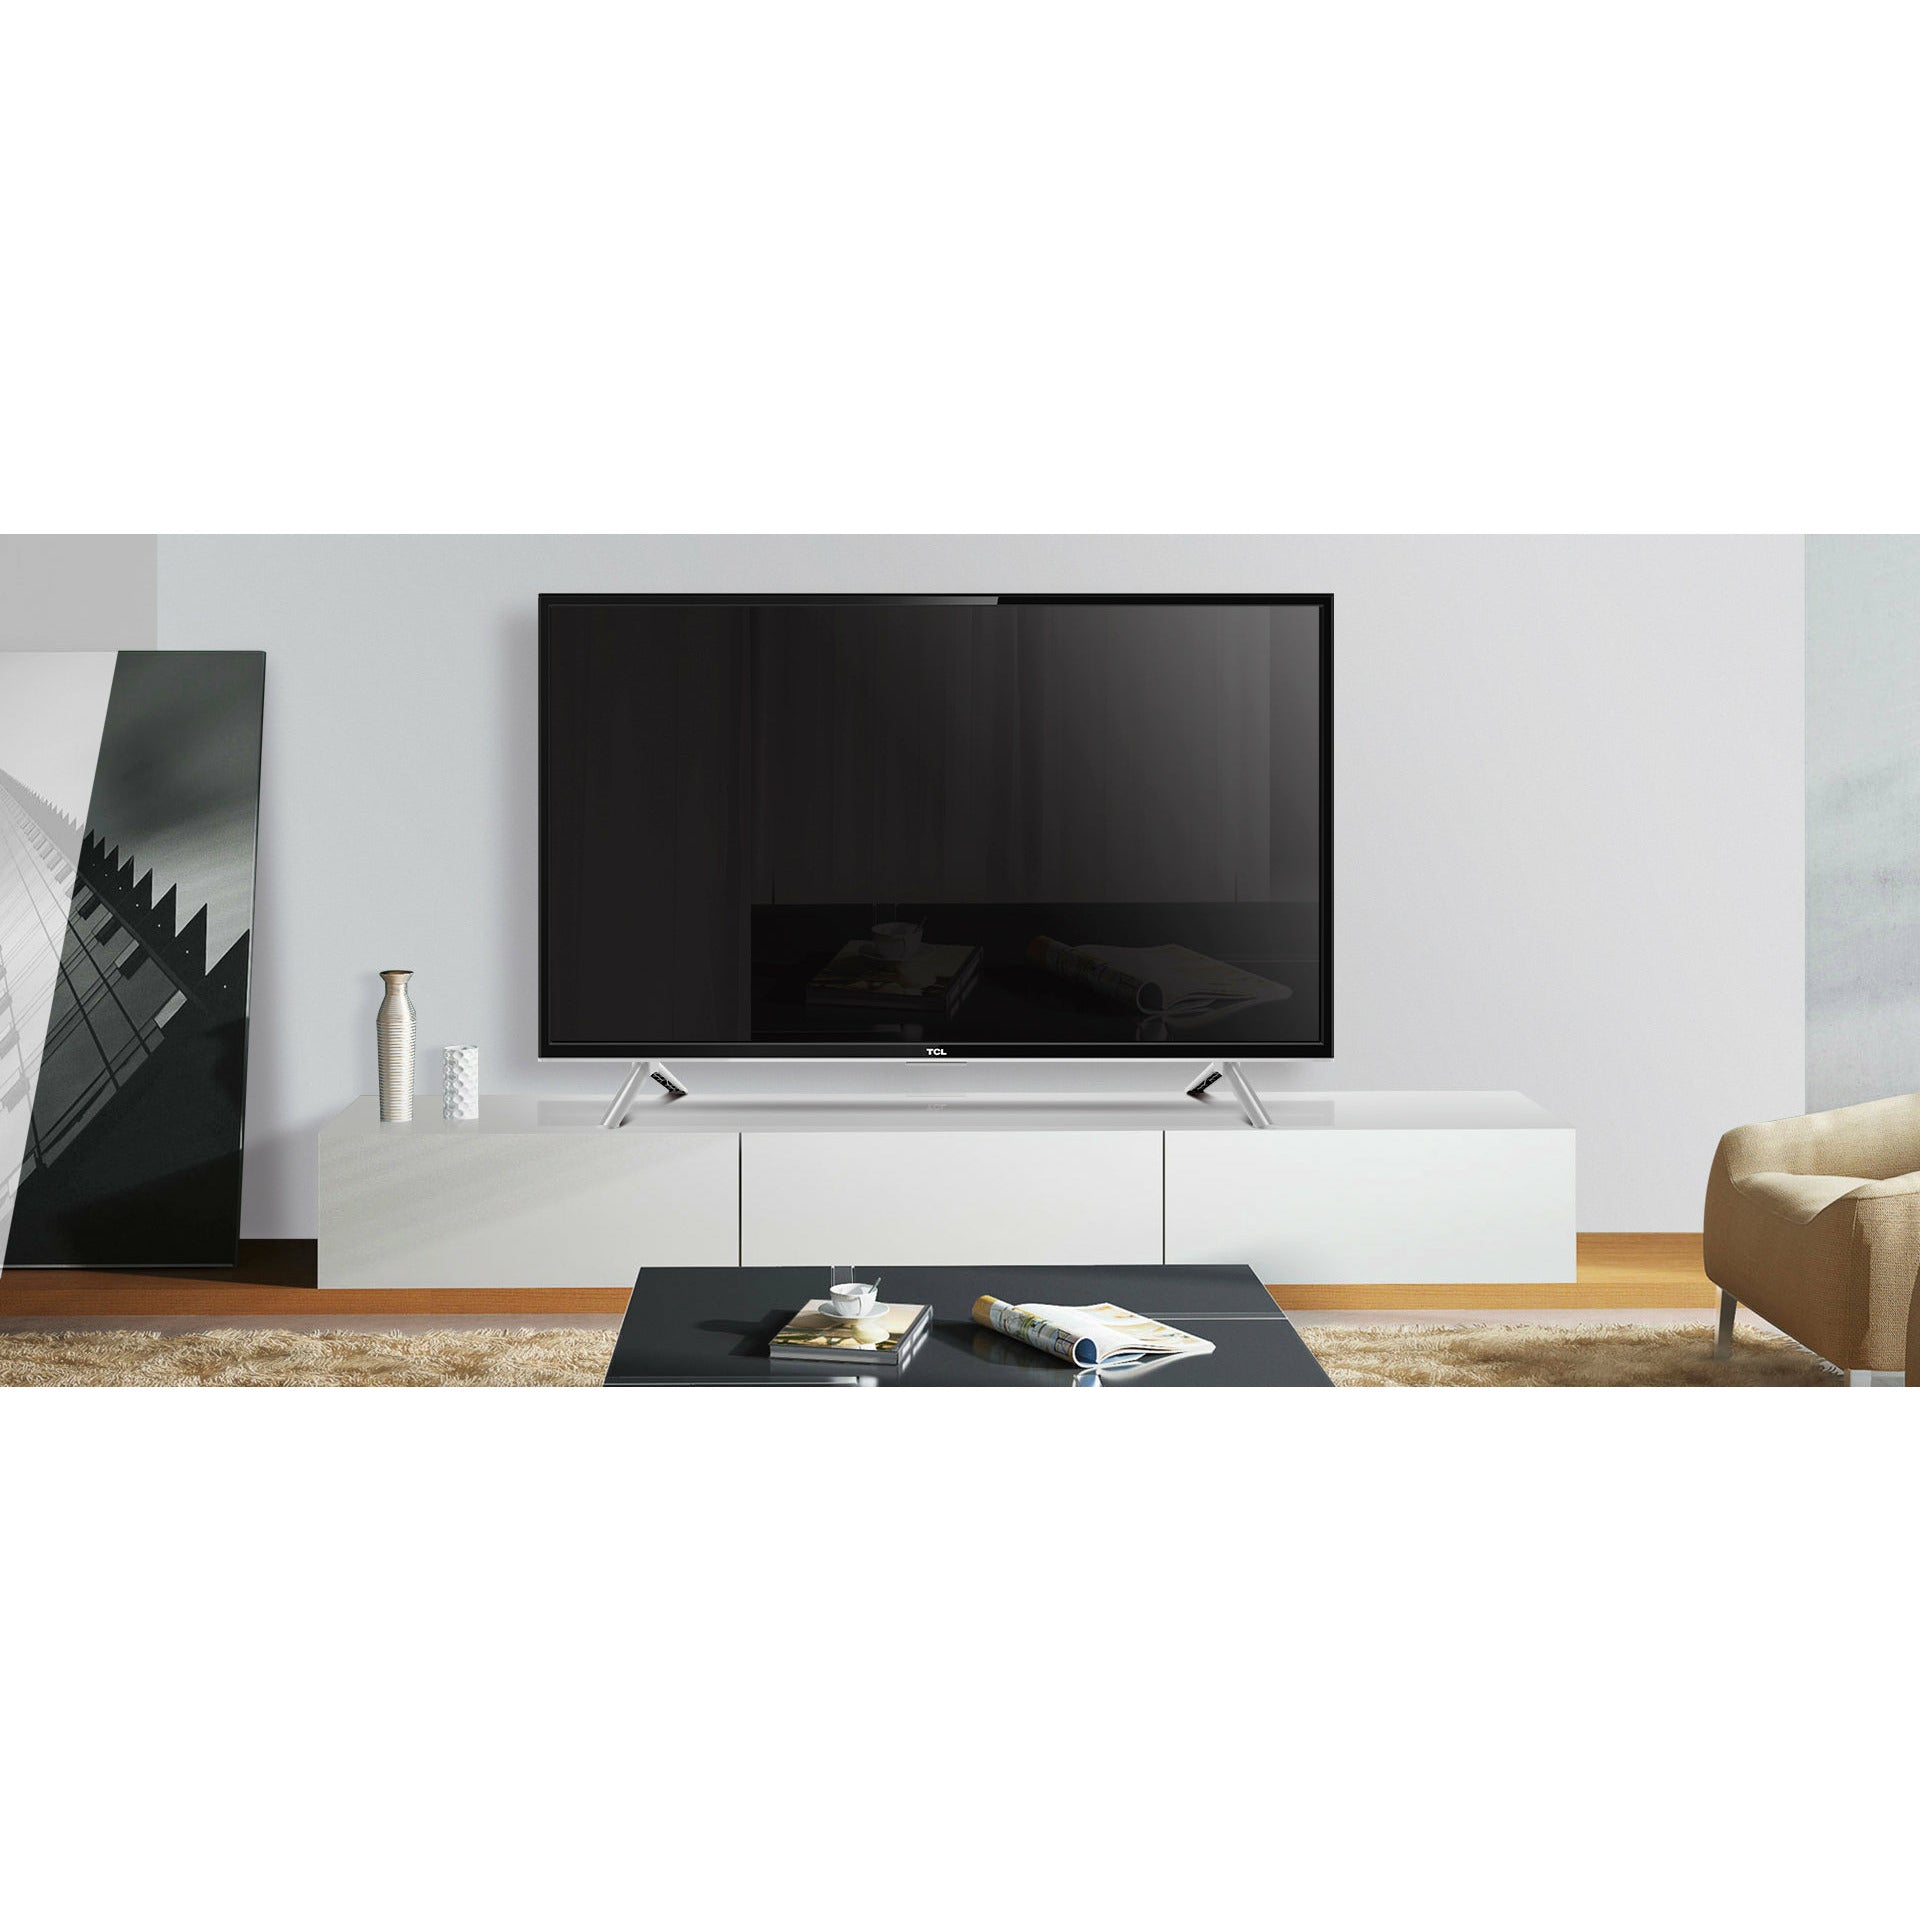 43" Full HD Smart TV TCL S62 Series - #موغامبو ستور#